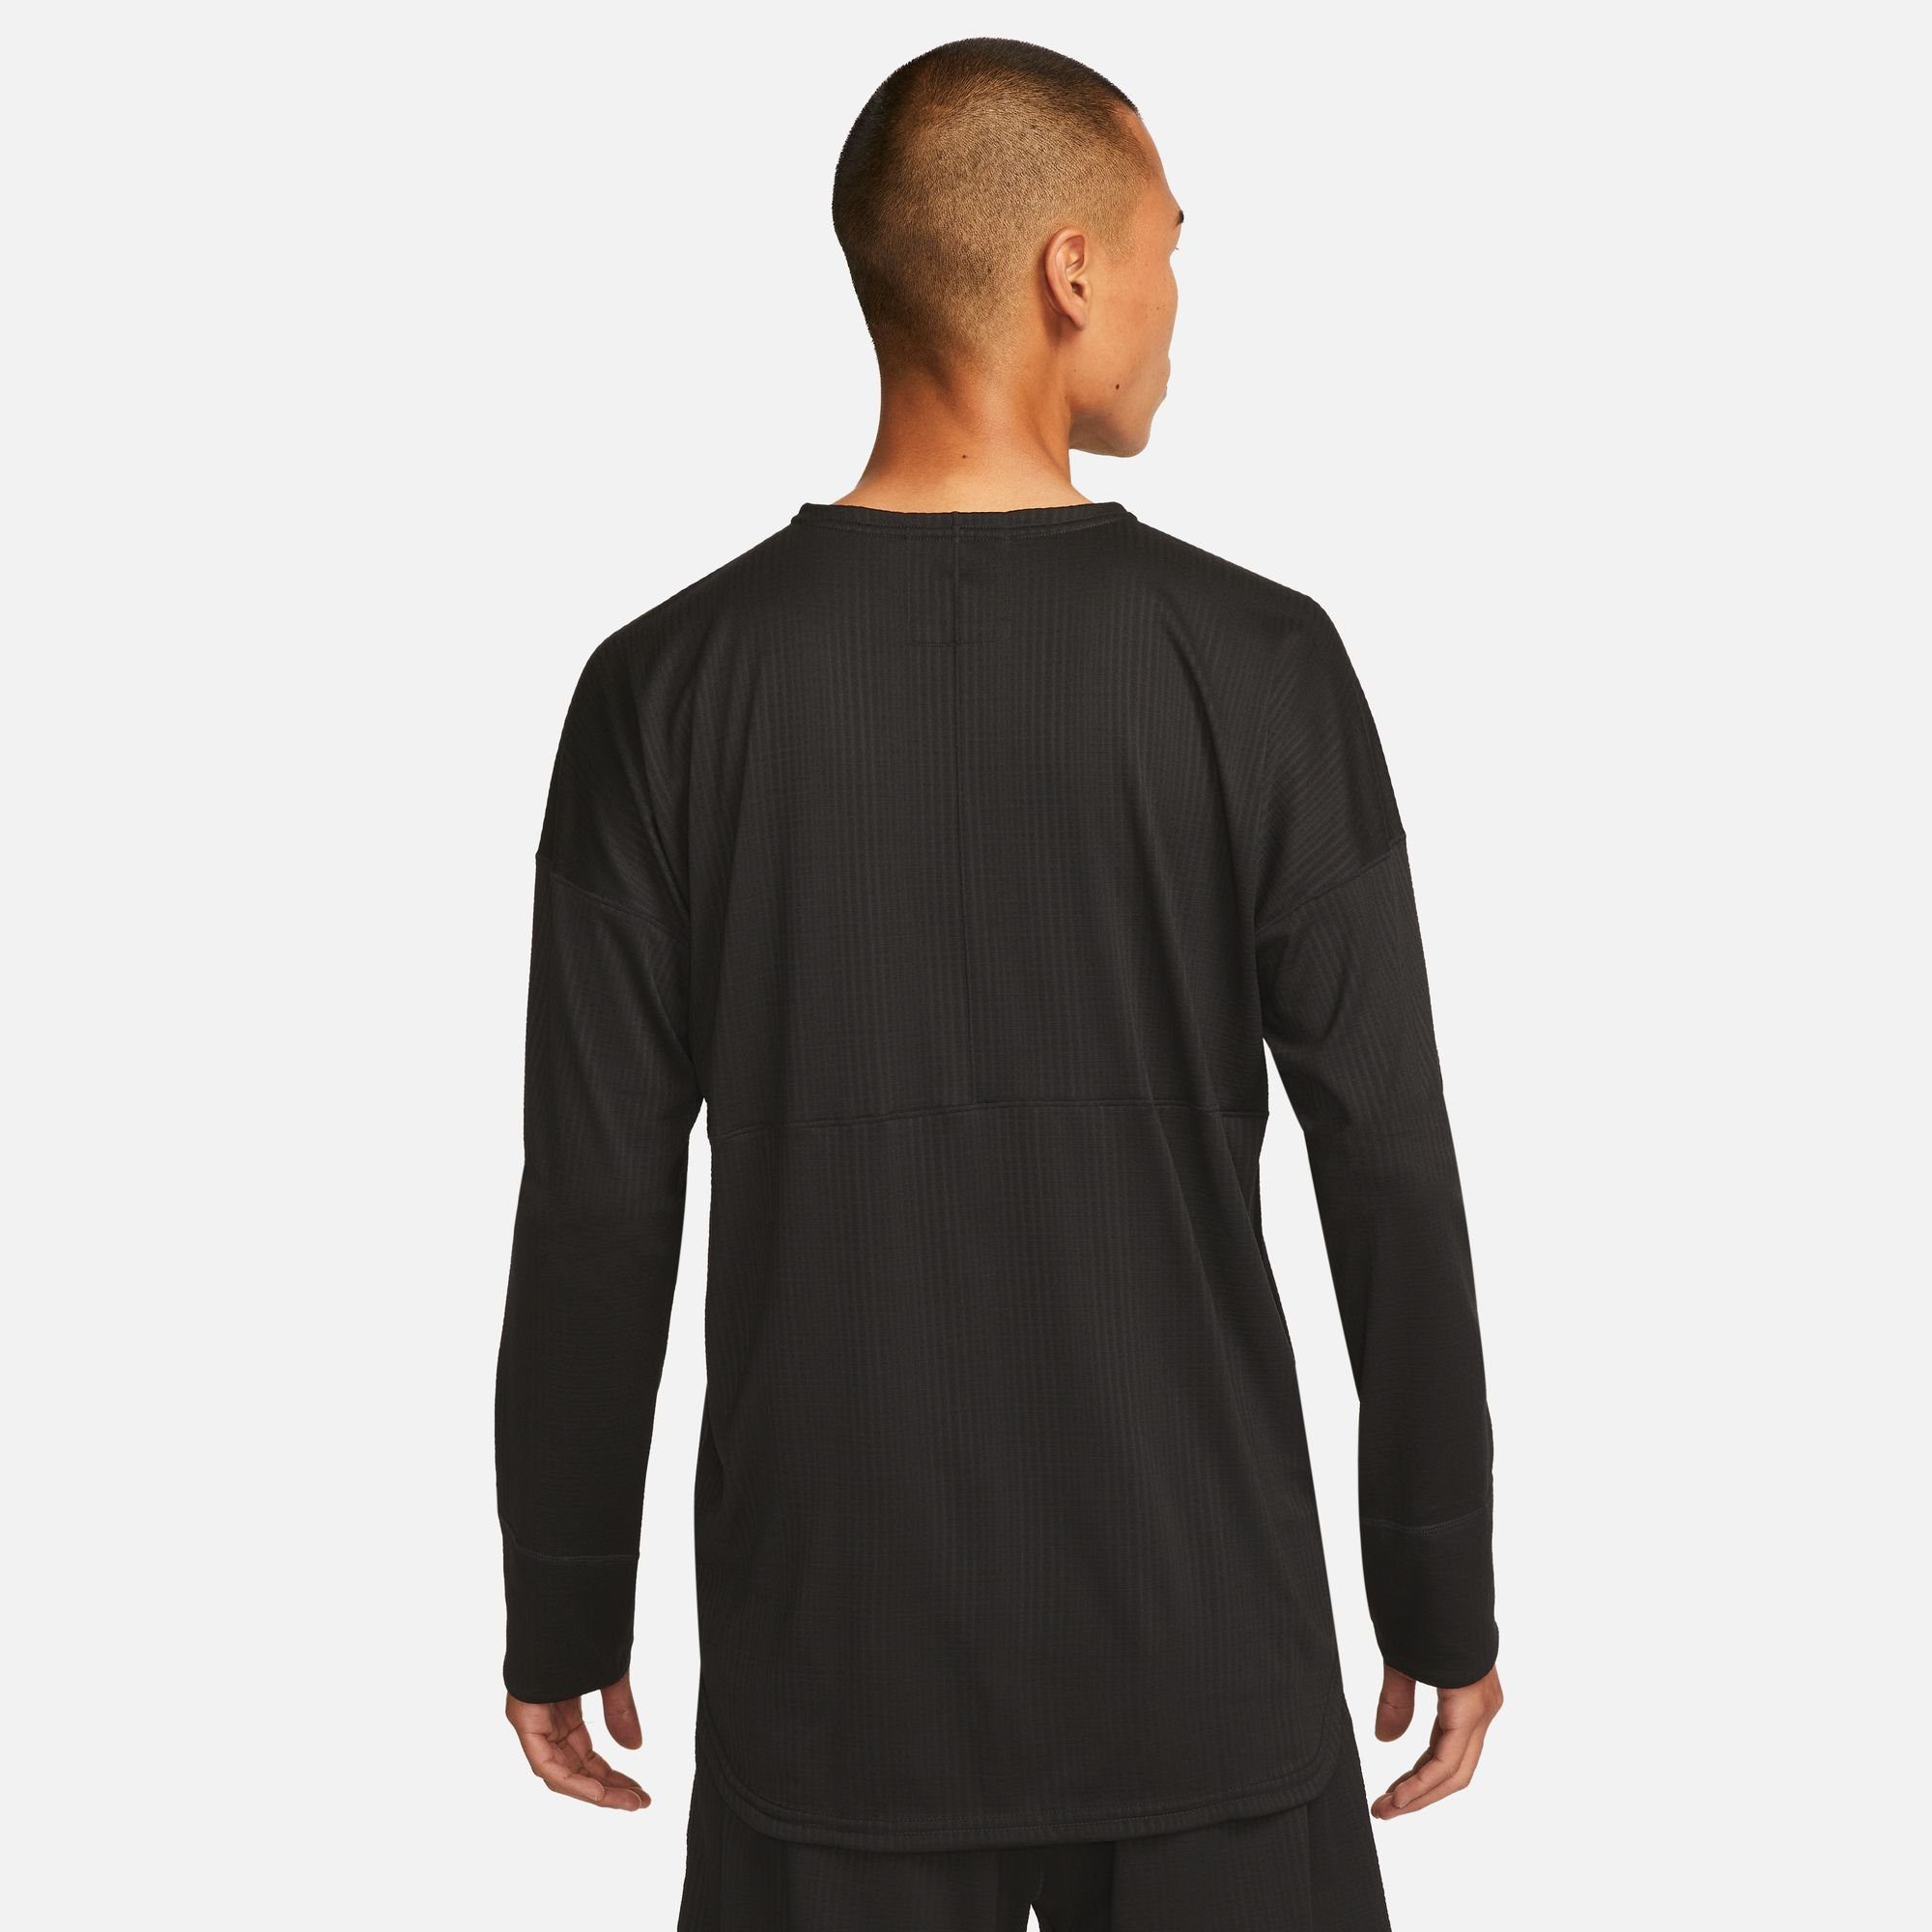 CREW DRI-FIT Yogashirt JERSEY YOGA MEN'S Nike